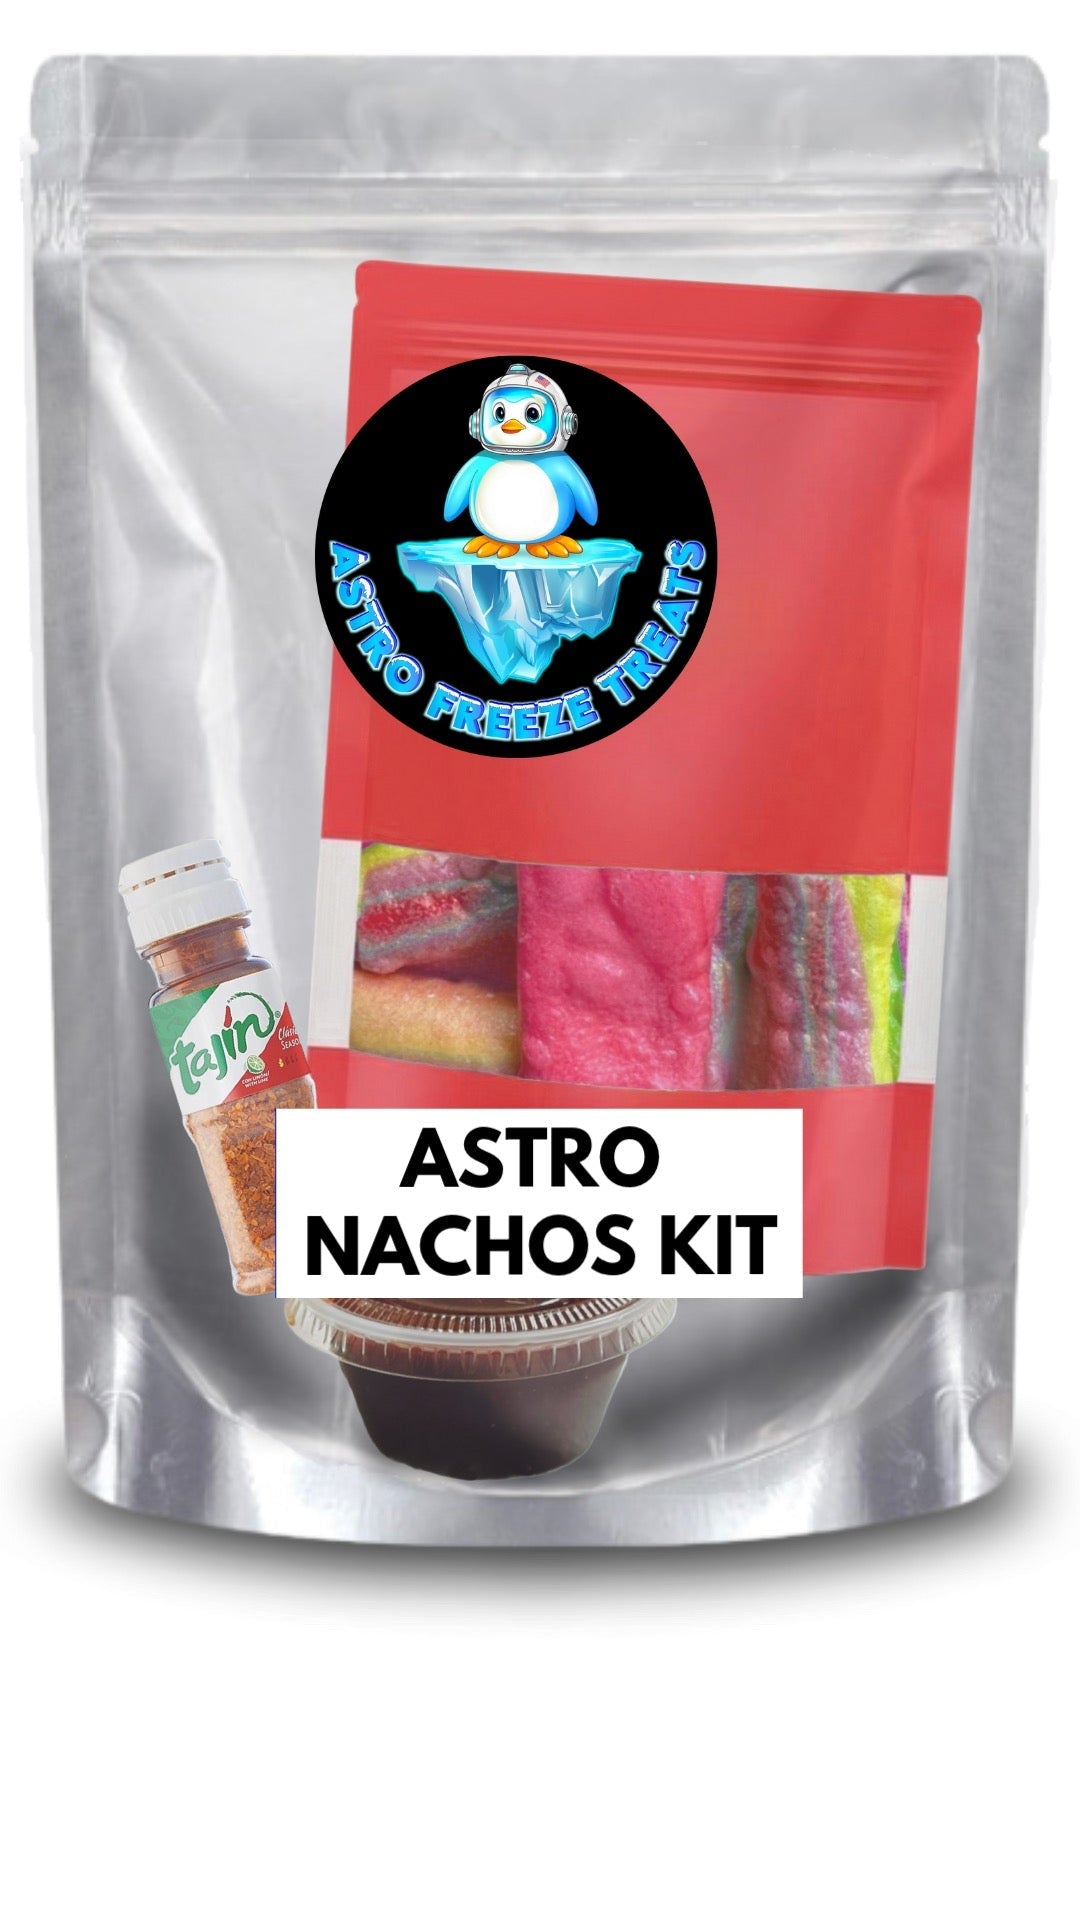 Astro Nachos Kit - ASTRO FREEZE TREATS